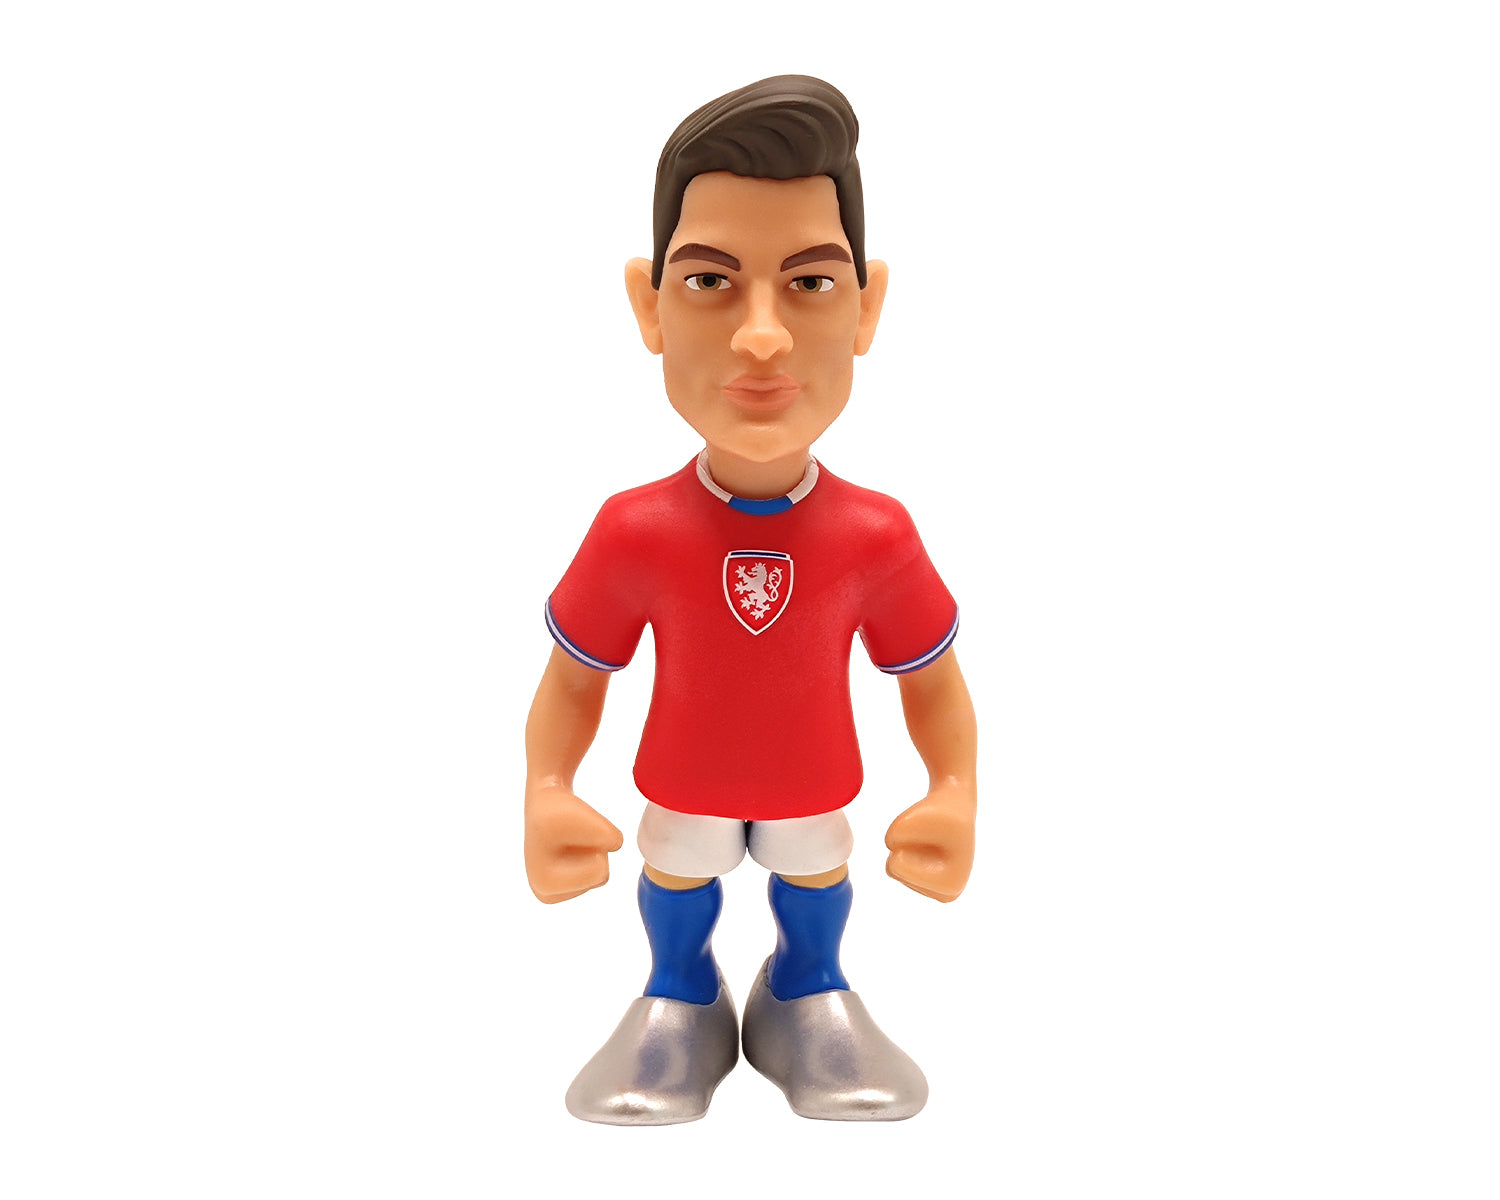 Minix -Football -CZ -SCHICK -Figurine -12 cm